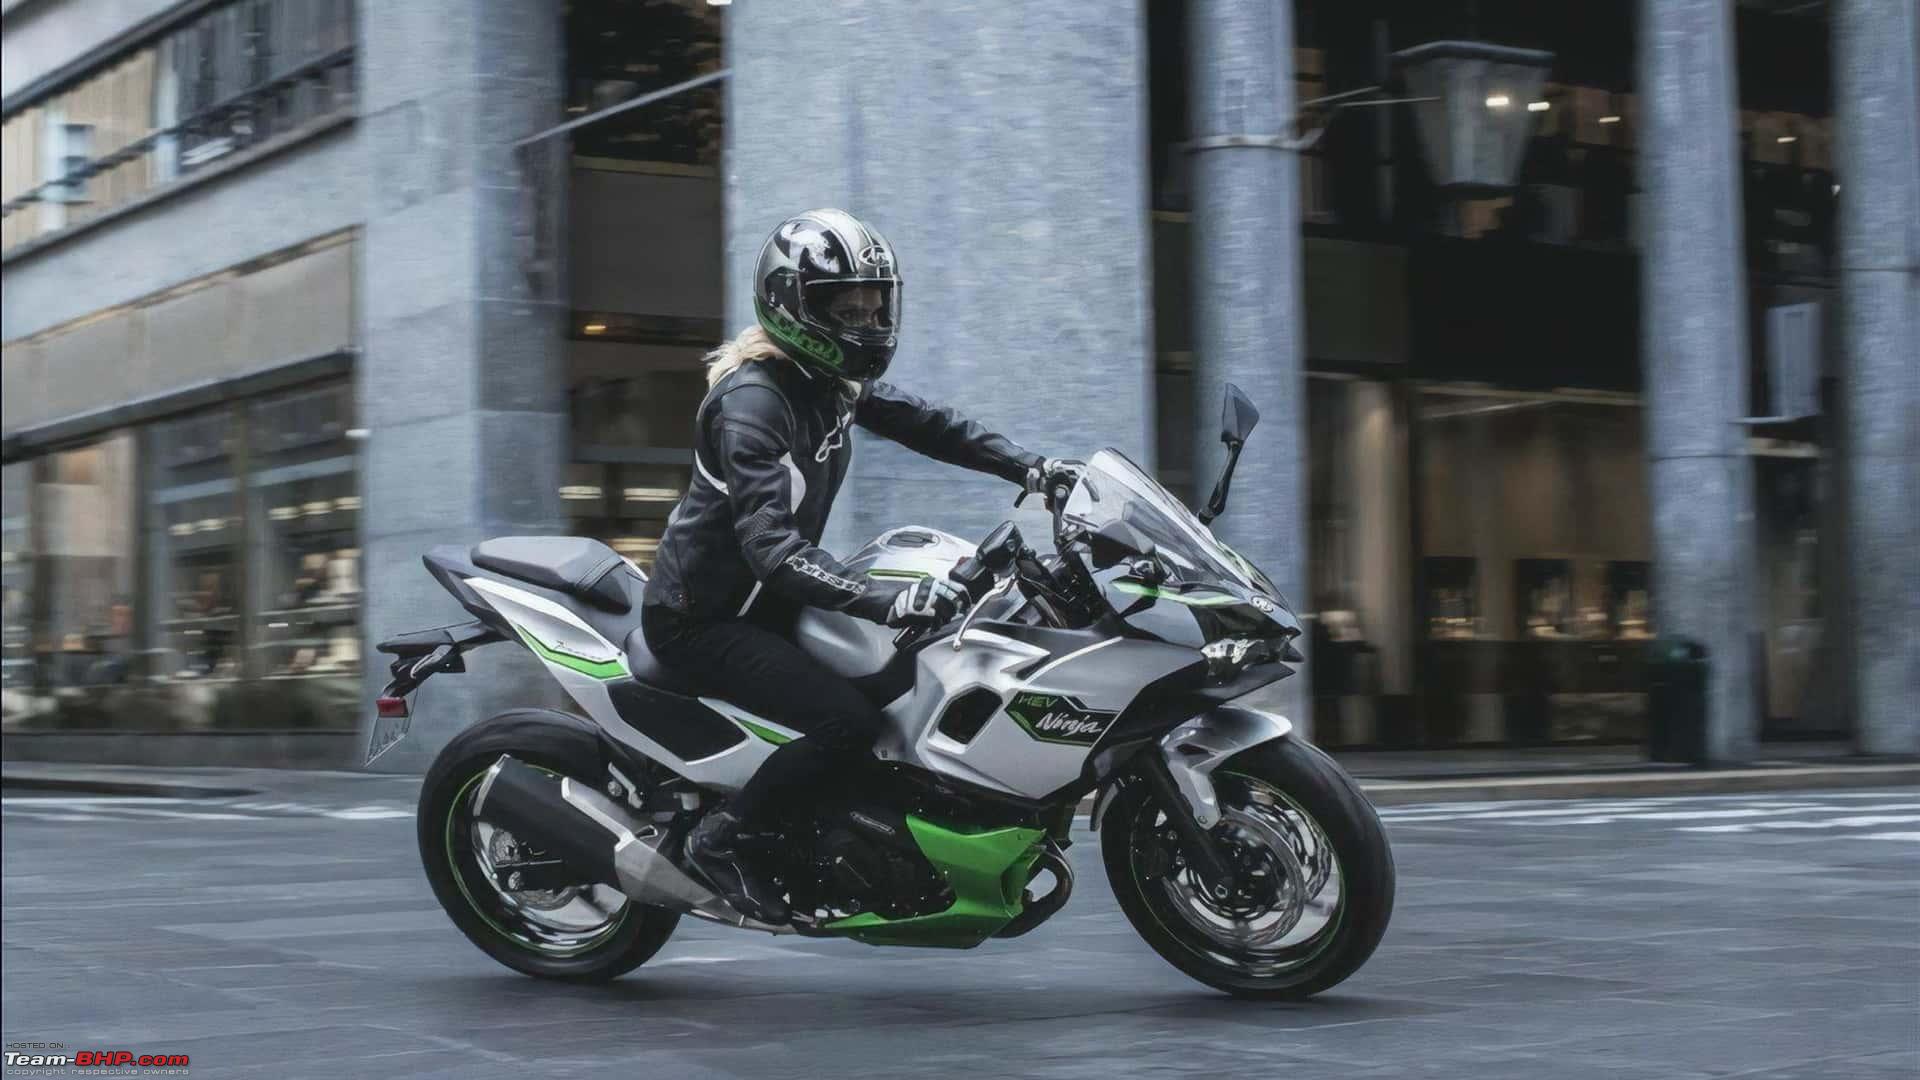 Kawasaki Ninja 7 Hybrid